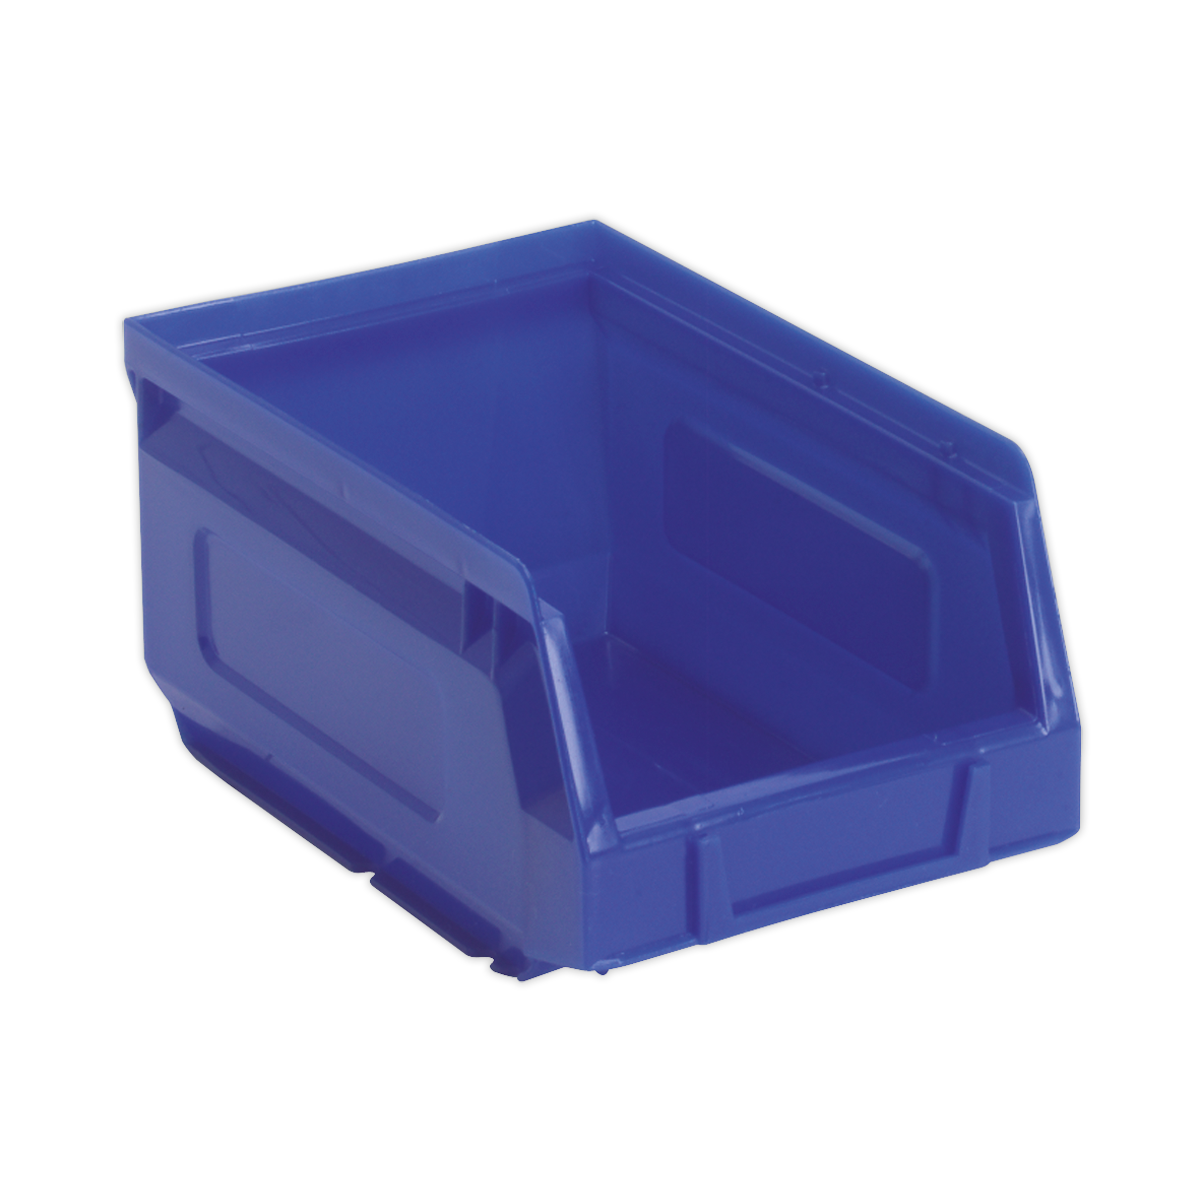 Sealey Plastic Storage Bin 105 x 165 x 85mm - Blue Pack of 48